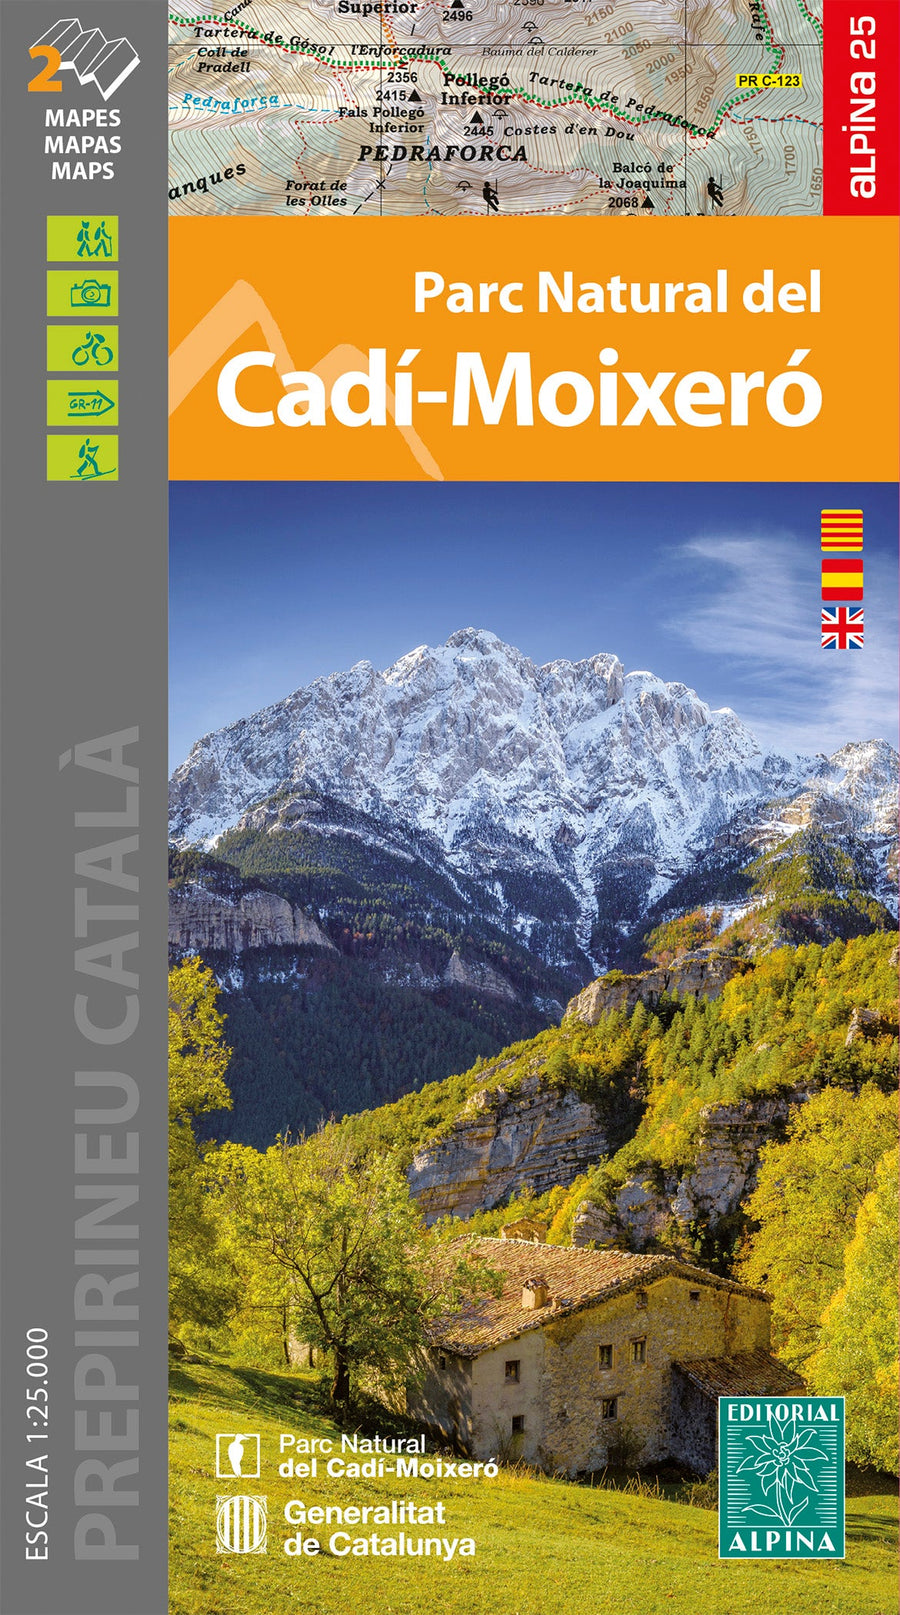 Carte de randonnée - Parc Naturel de Cadi-Moixero (Pyrénées catalanes) | Alpina carte pliée Editorial Alpina 